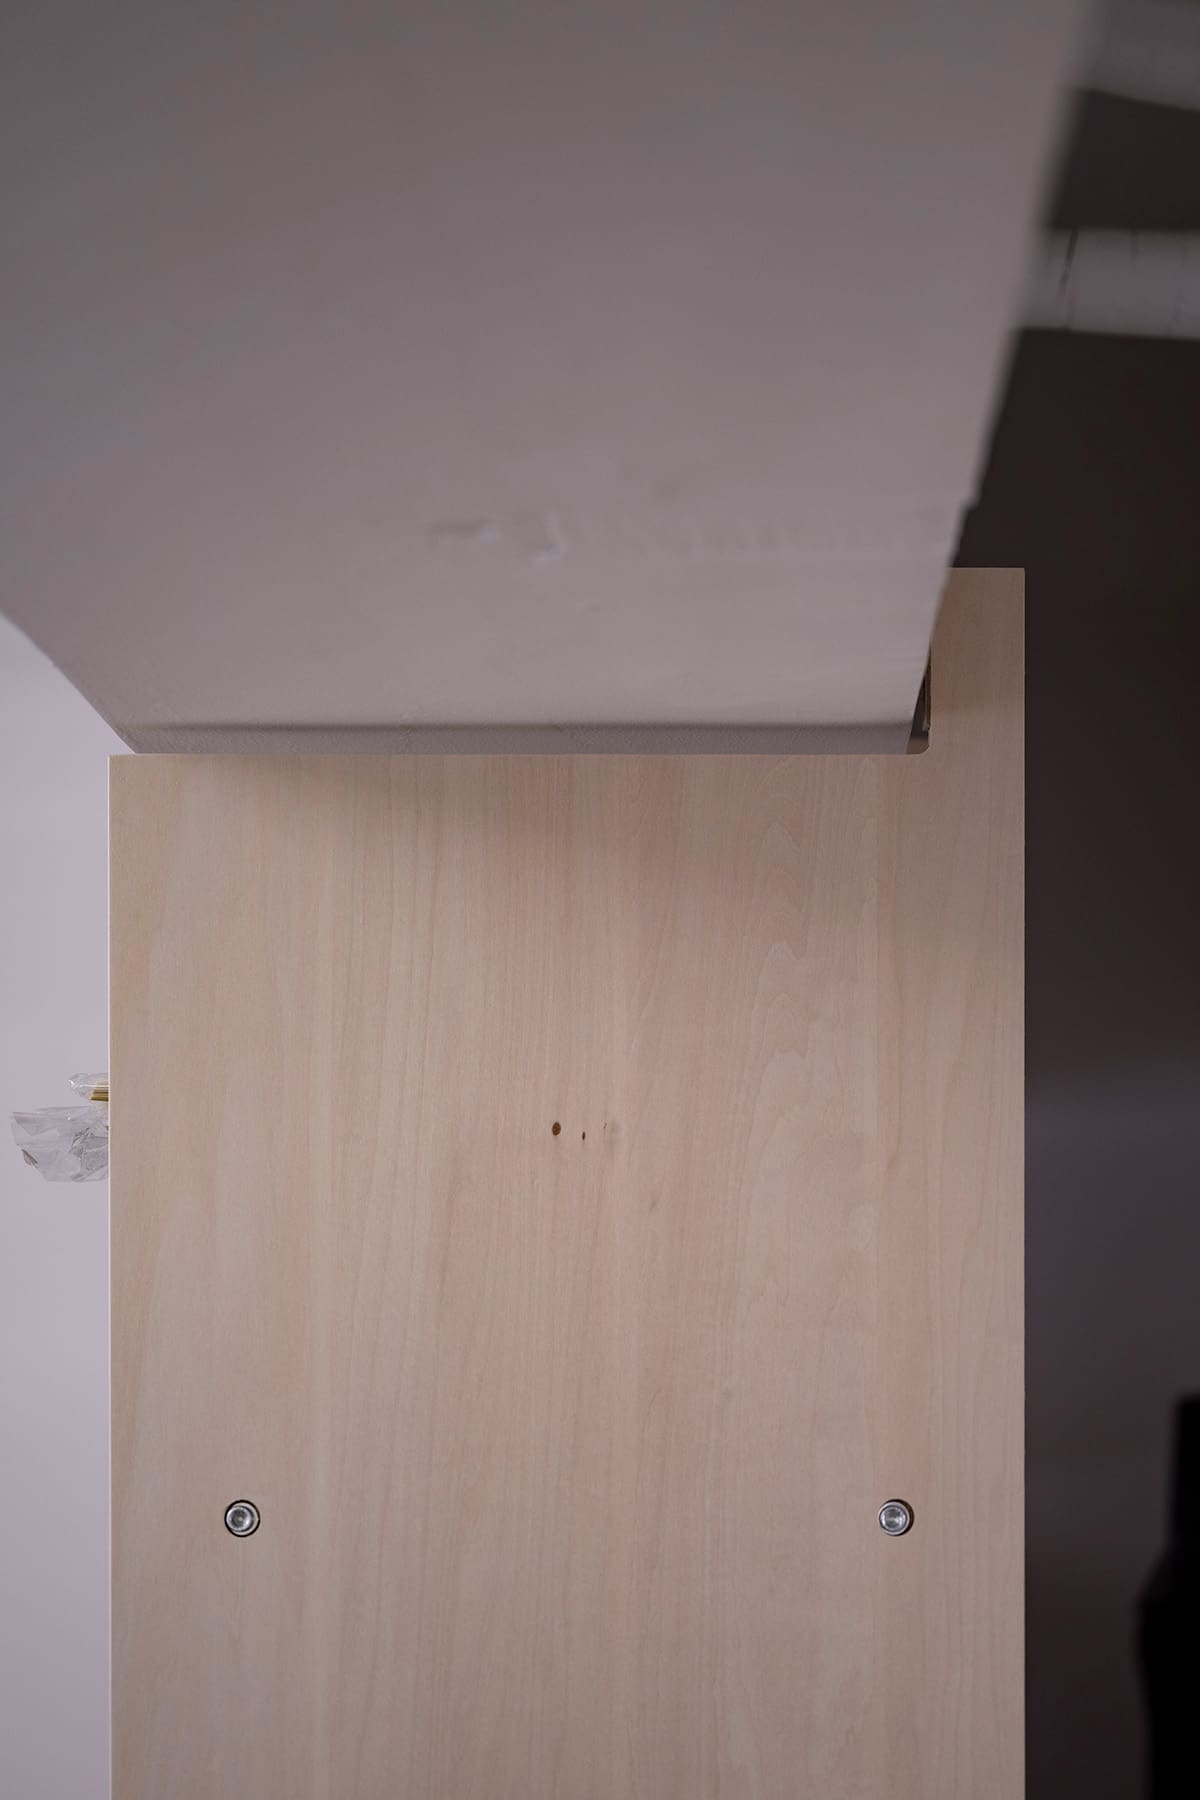 【File 745】ソーダデザイン様のアトリエ - Shelf 壁一面の本棚 奥行350mm - マルゲリータお客様事例